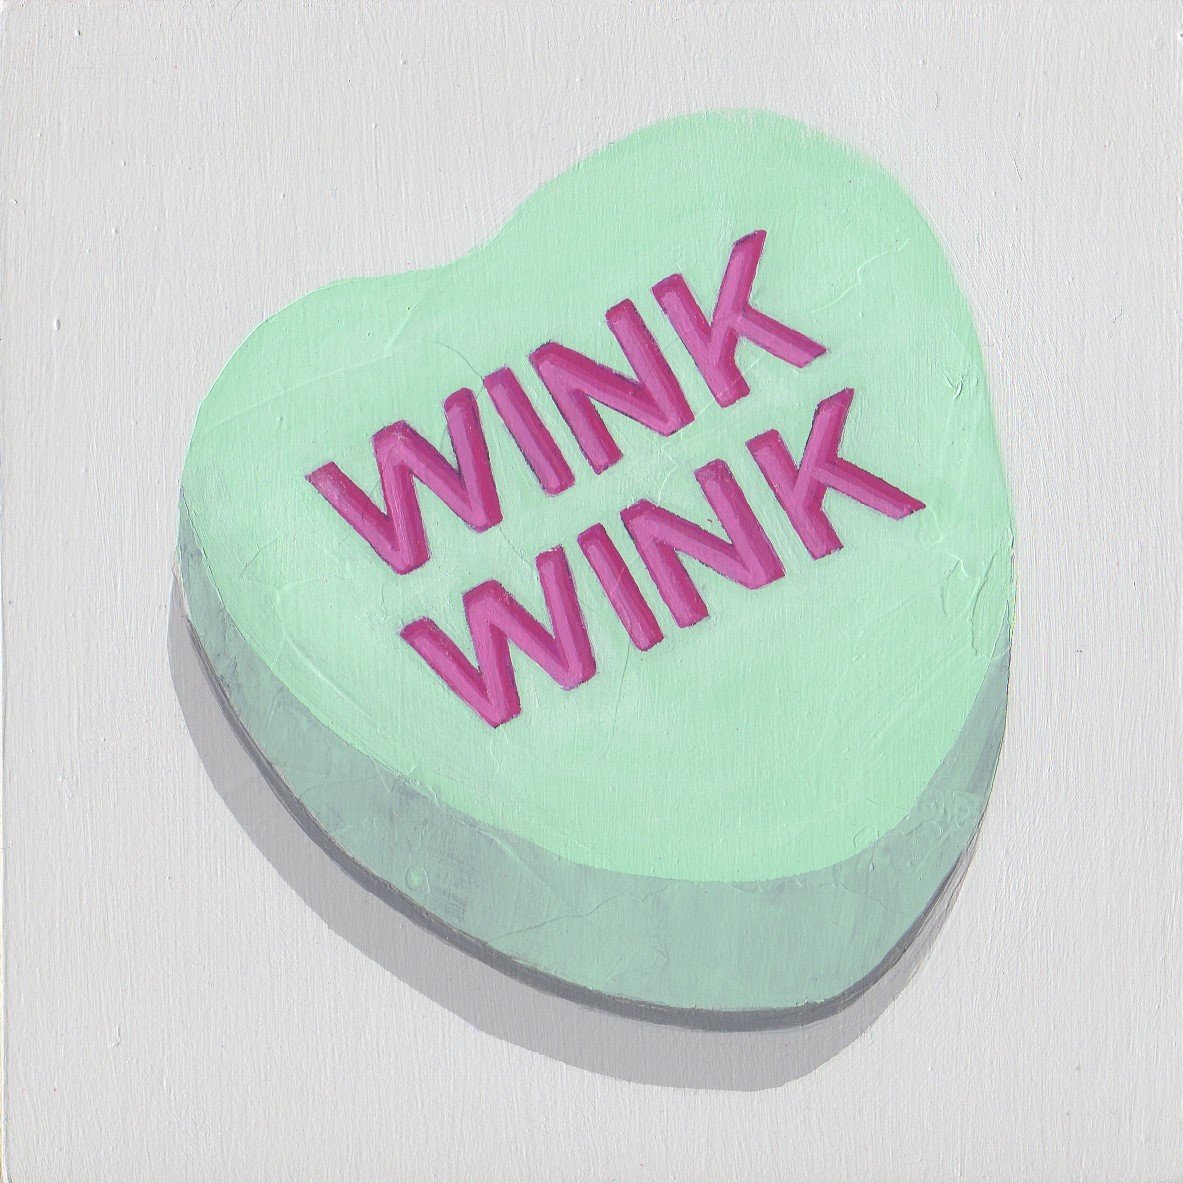 Conversation Heart Single WINK WINK lemon by Nicci SevierVuyk.jpg